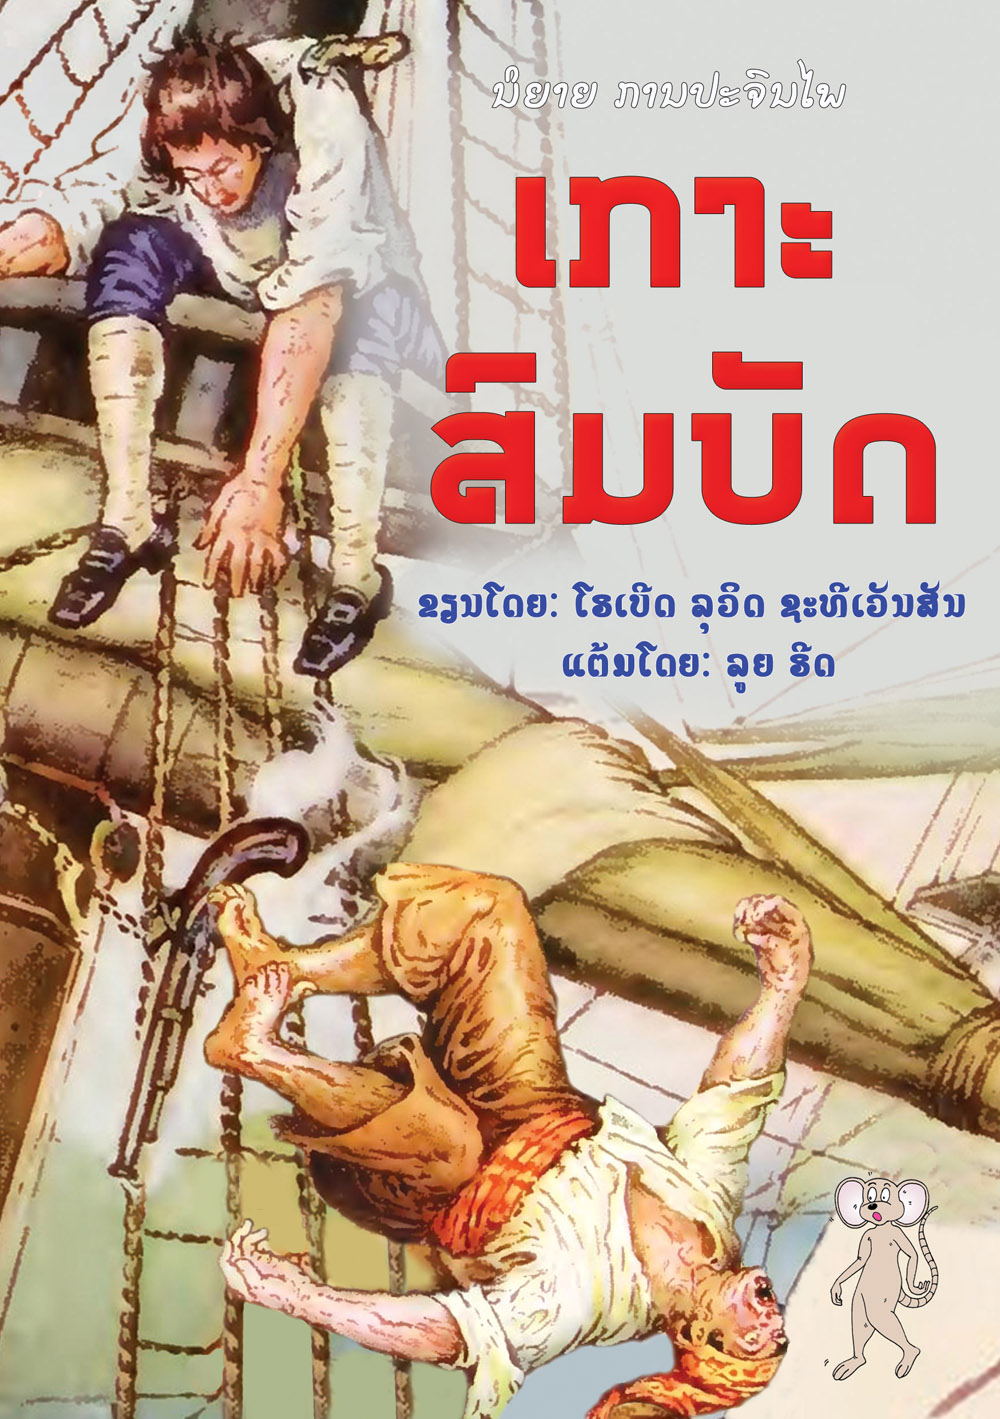 Treasure Island large book cover, published in Lao language